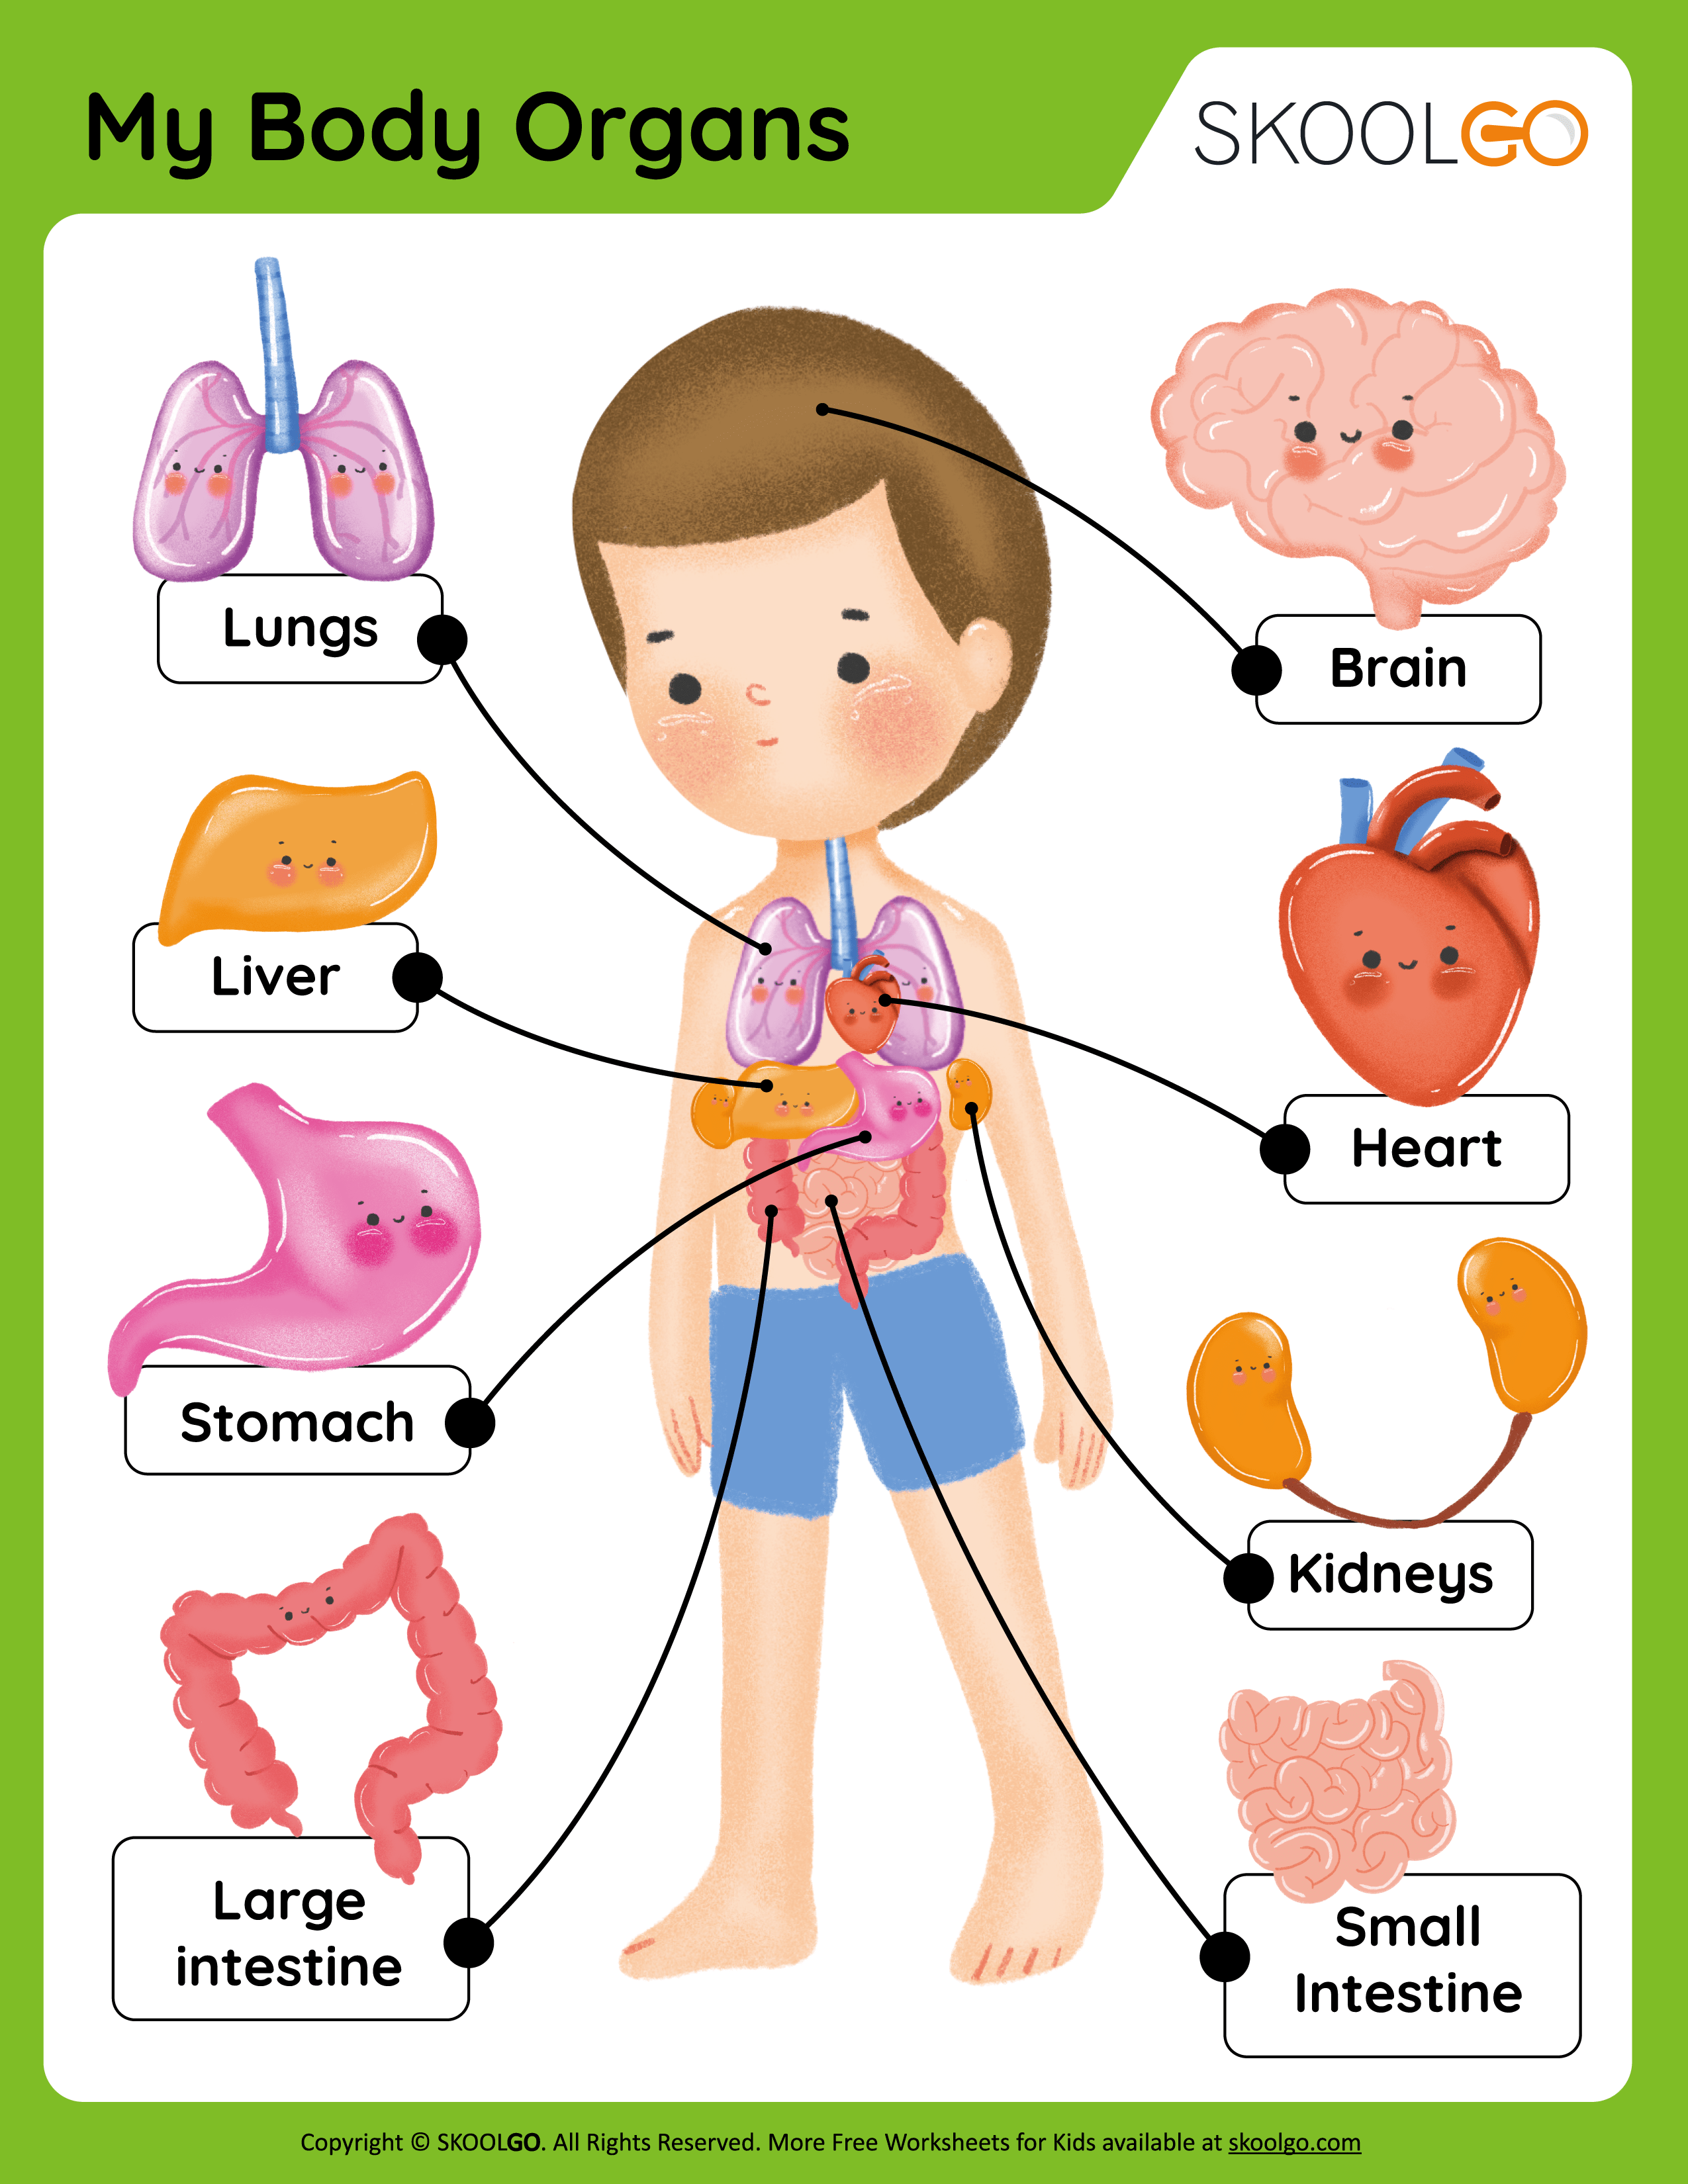 My Body Organs - Free Worksheet for Kids